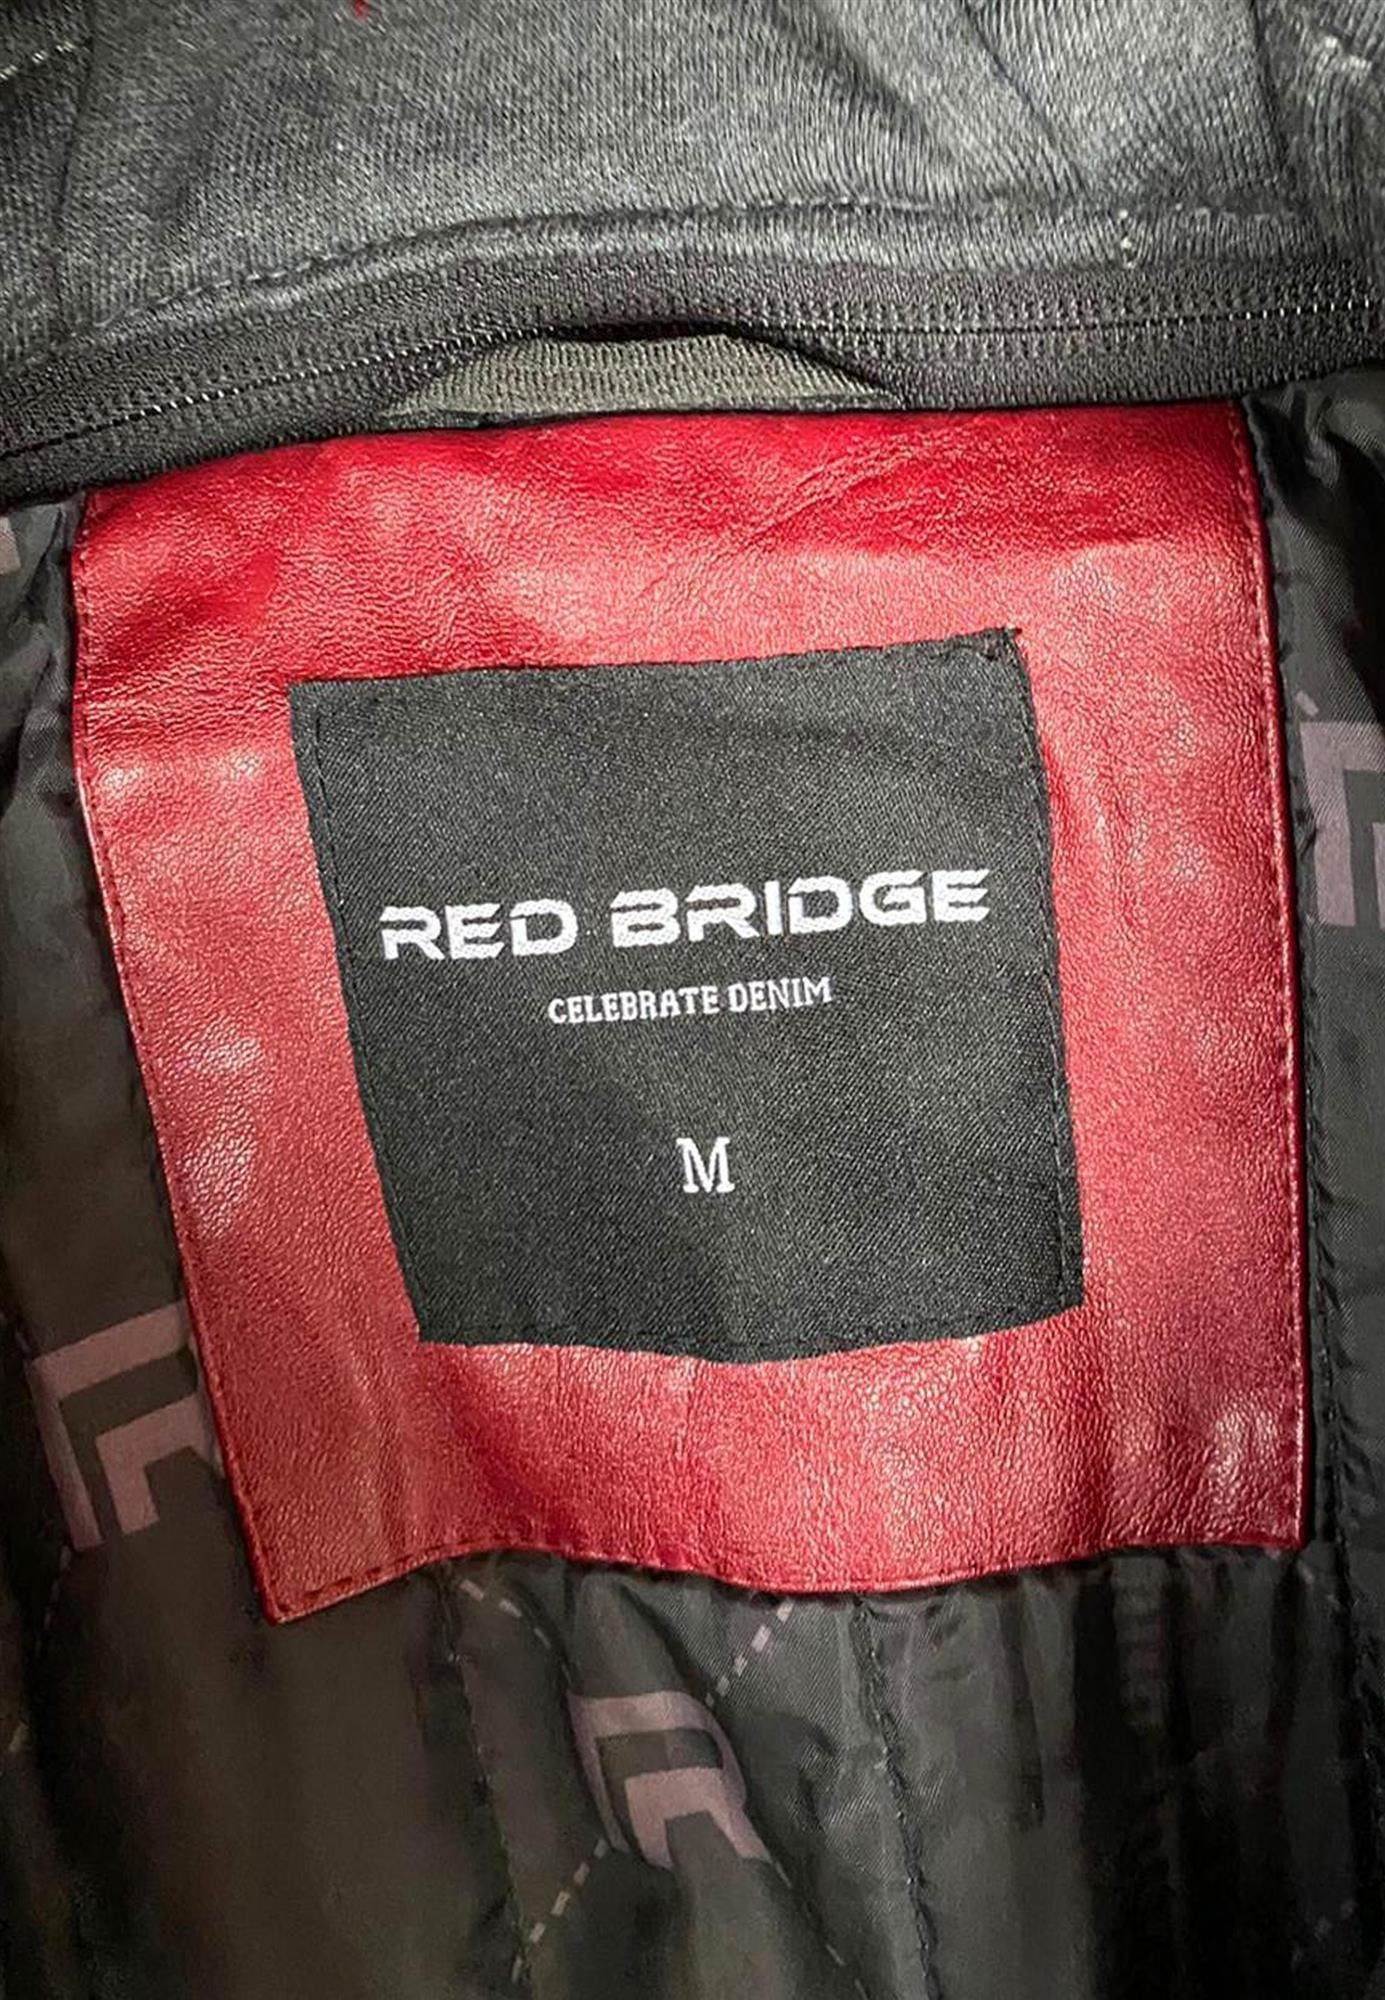 RedBridge Lederimitatjacke aus Dirtyrot abnehmbarer und hochwertig, Kunstleder Kapuze robust